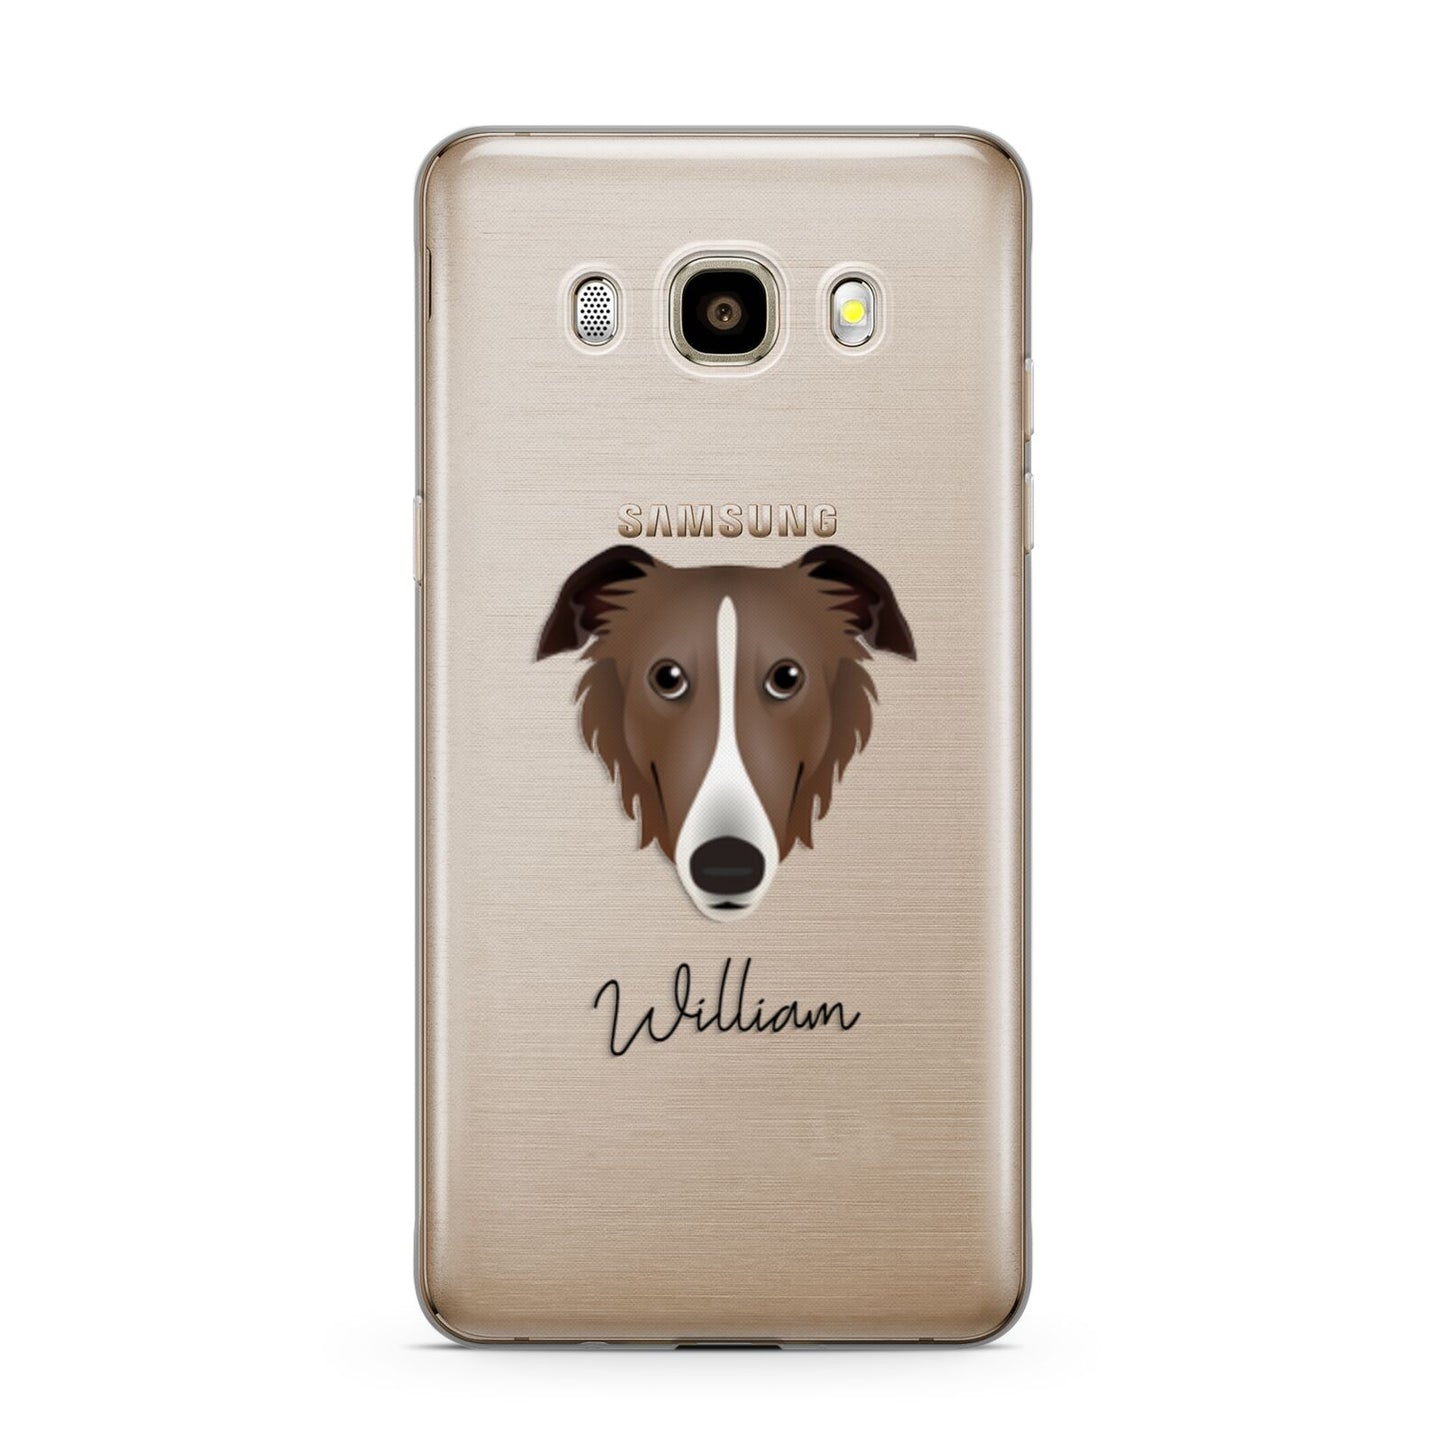 Borzoi Personalised Samsung Galaxy J7 2016 Case on gold phone